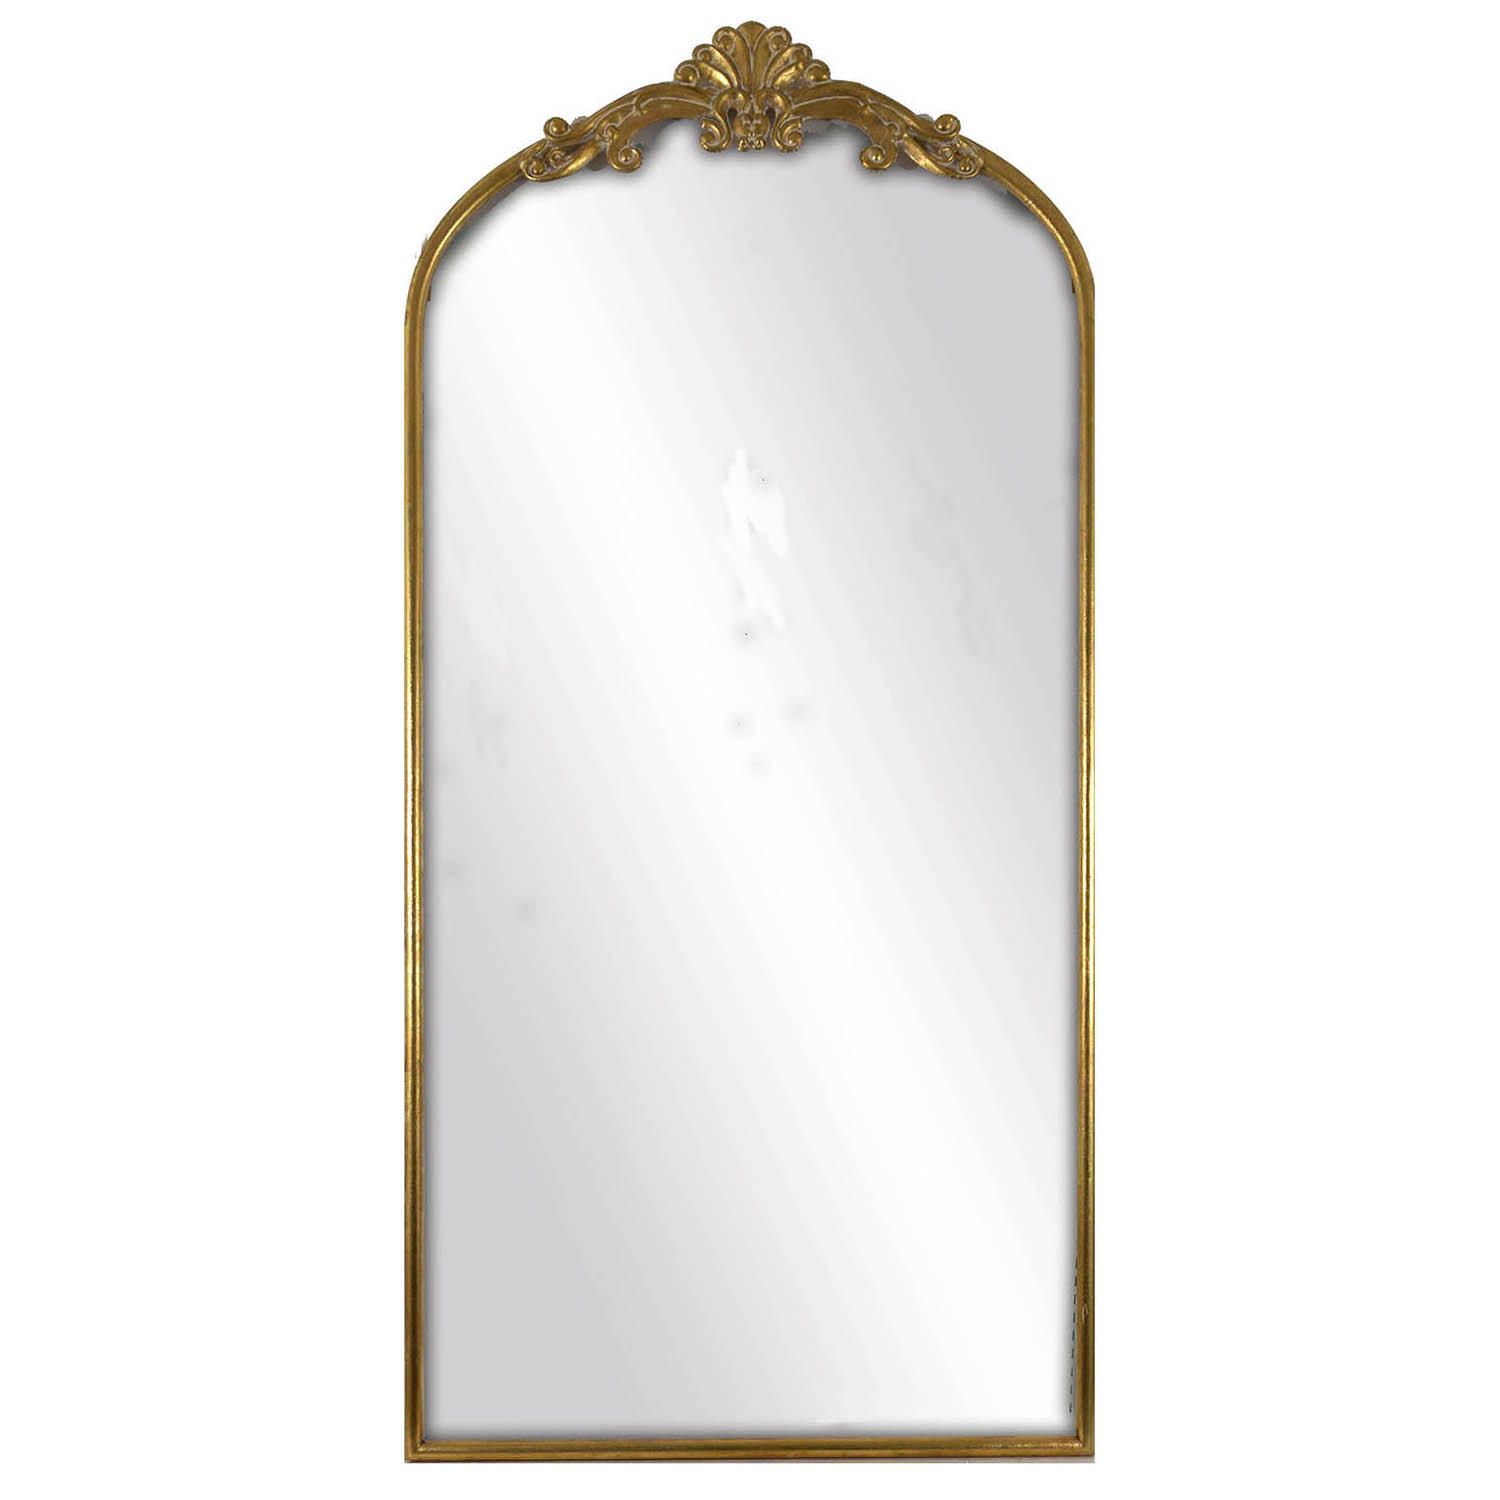 Azalea Park Filigree Floor Mirror, Gold Metal Frame | Sam's Club